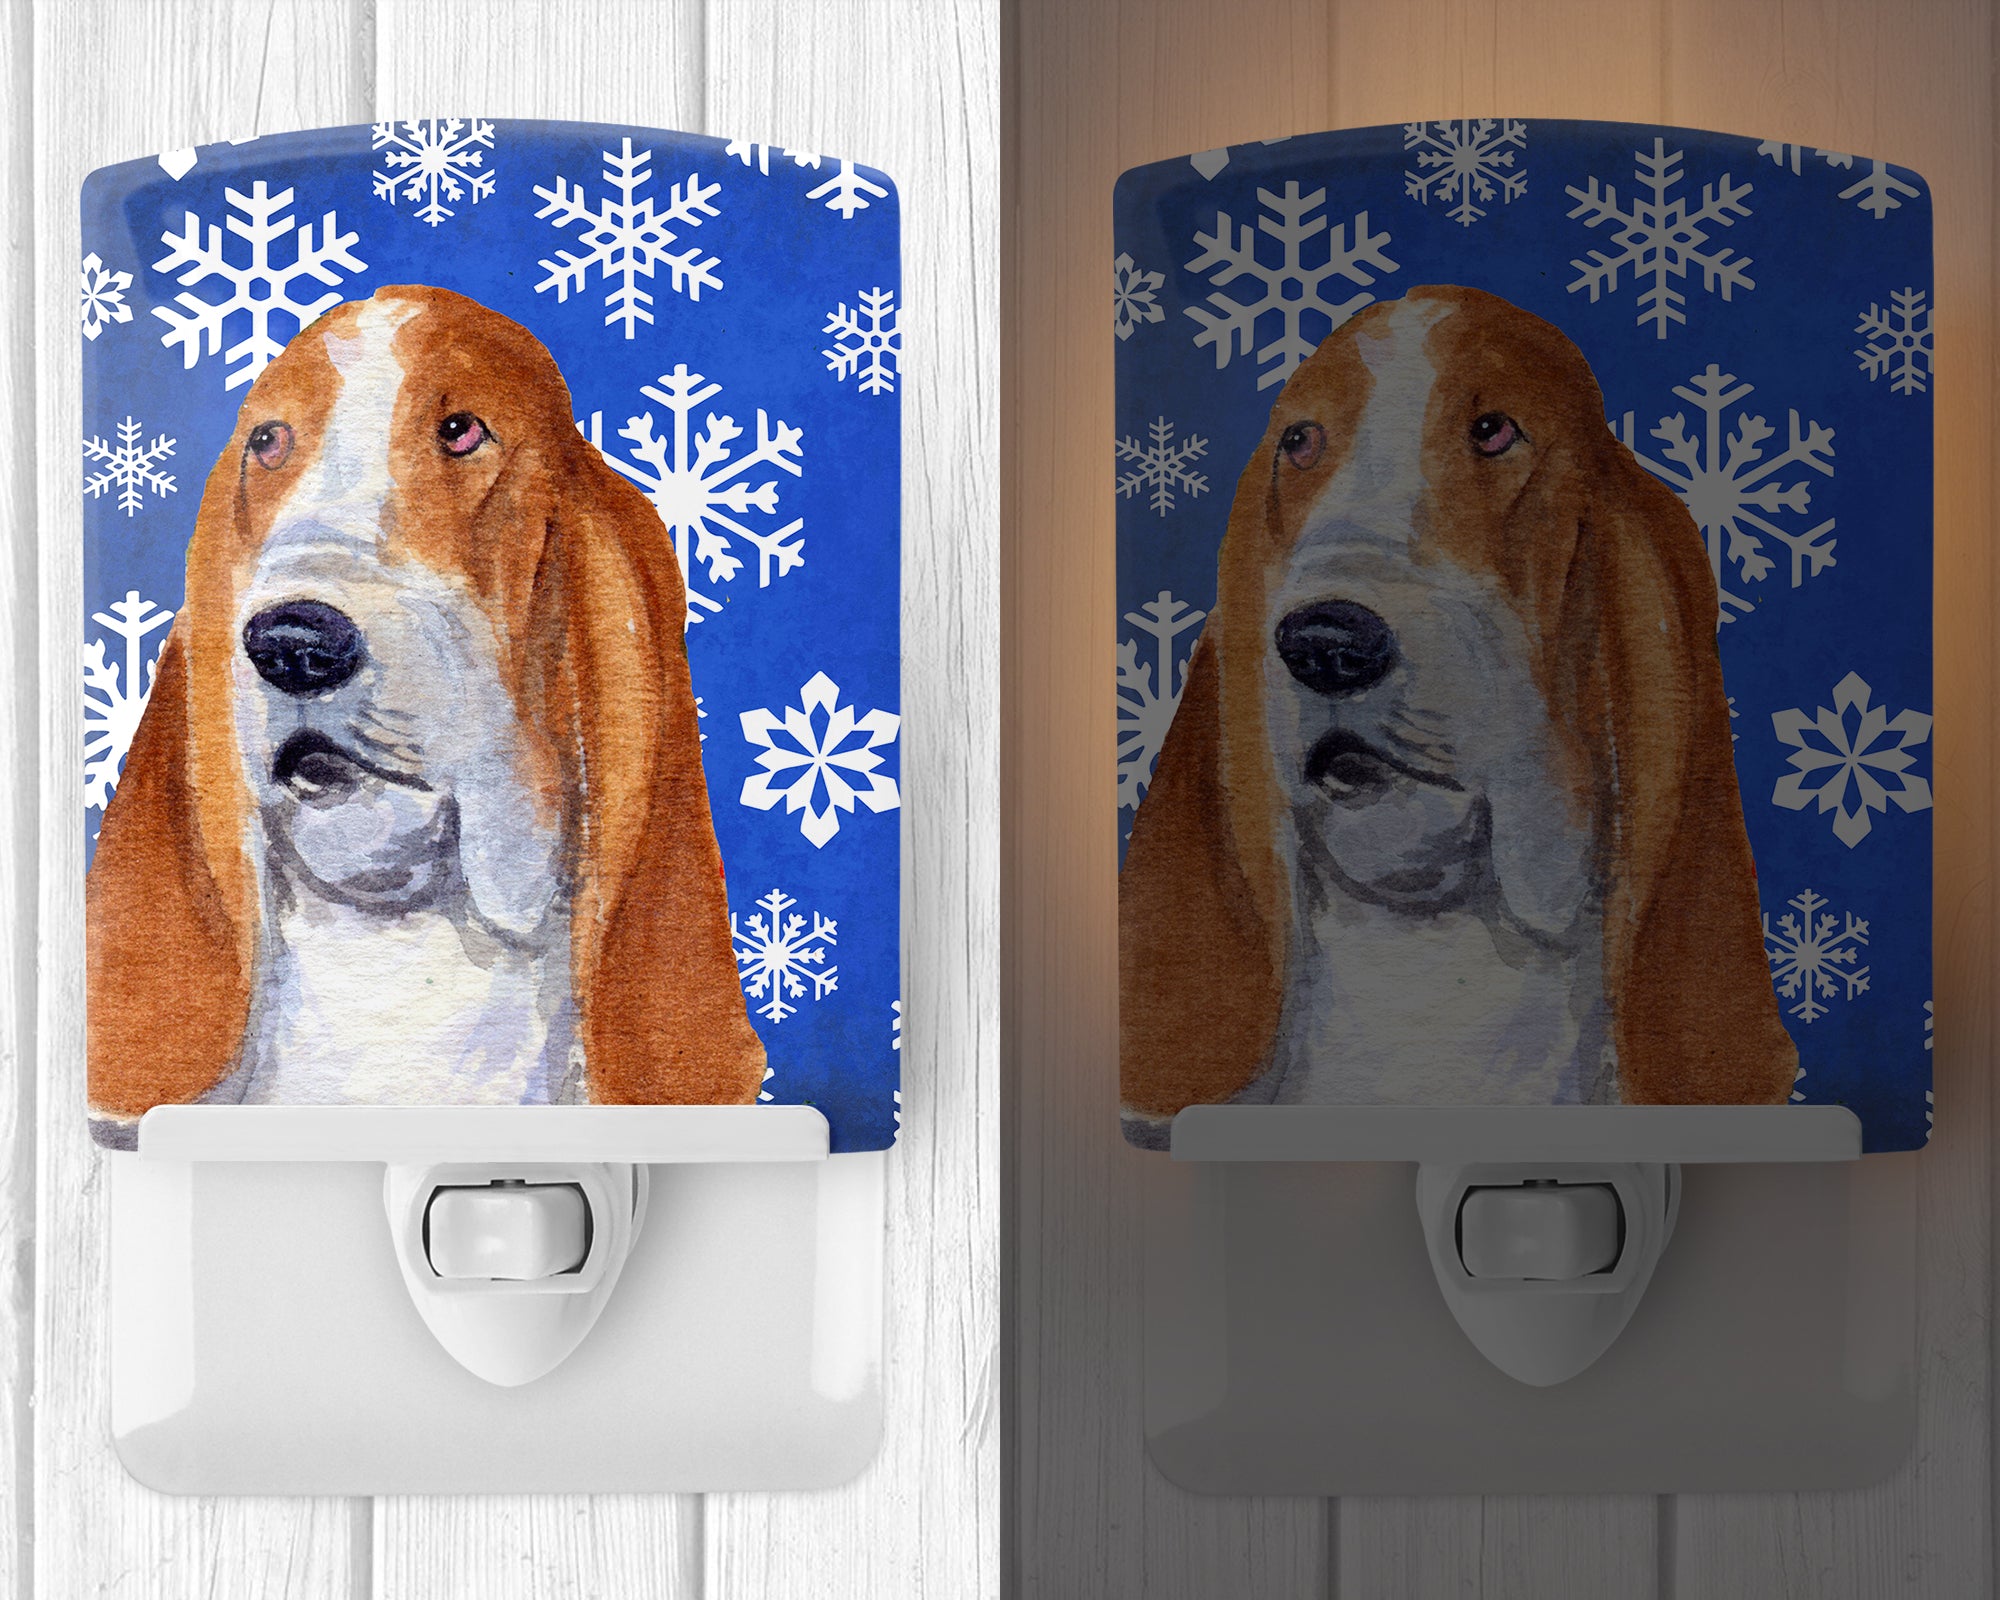 Basset Hound Winter Snowflakes Holiday Ceramic Night Light SS4666CNL - the-store.com